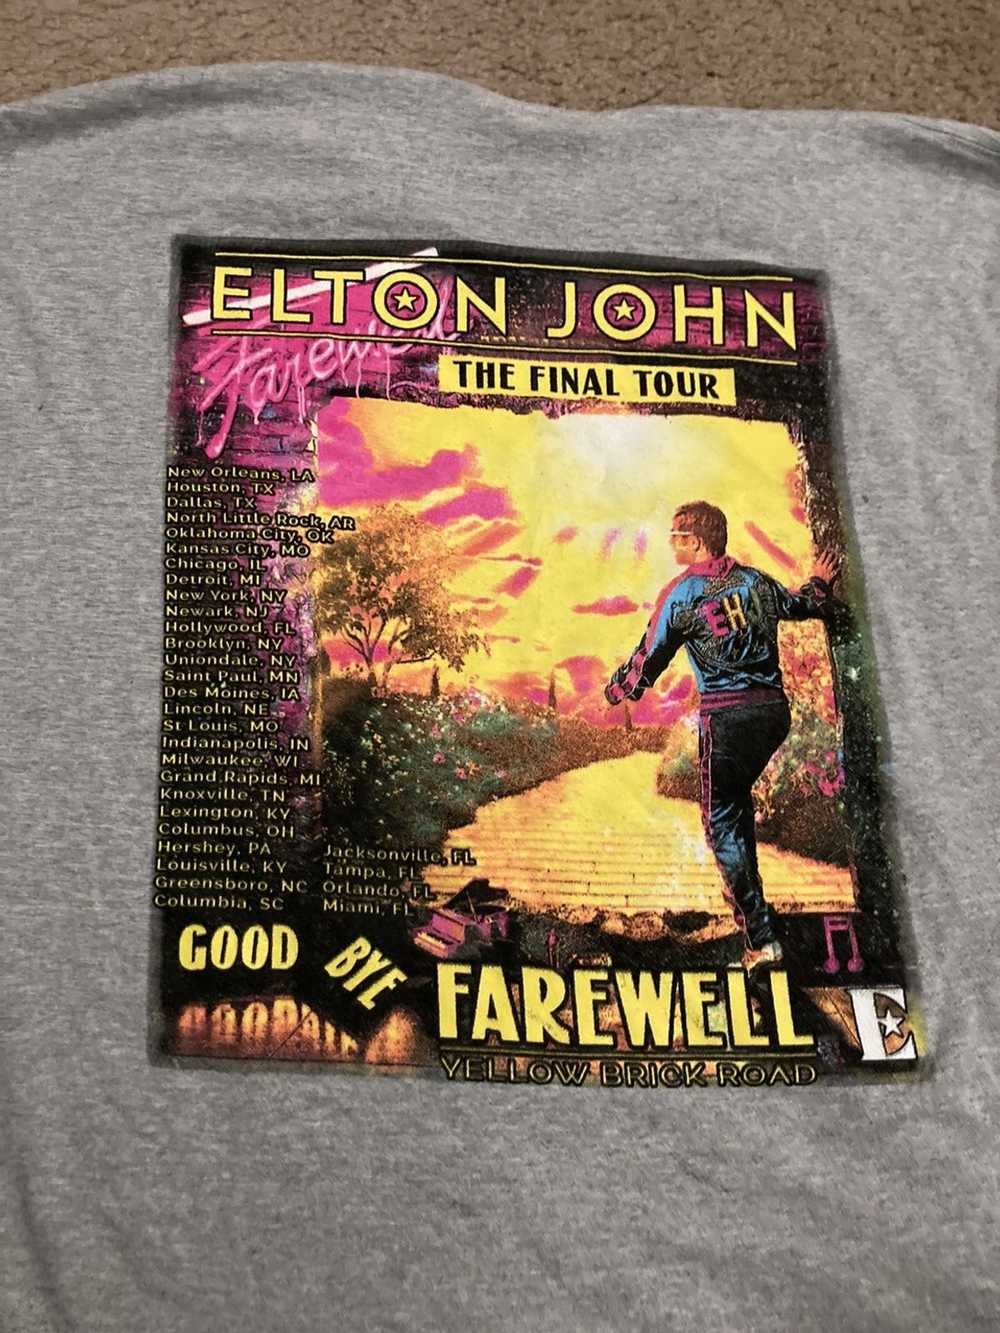 Gildan Elton John t shirt - image 2